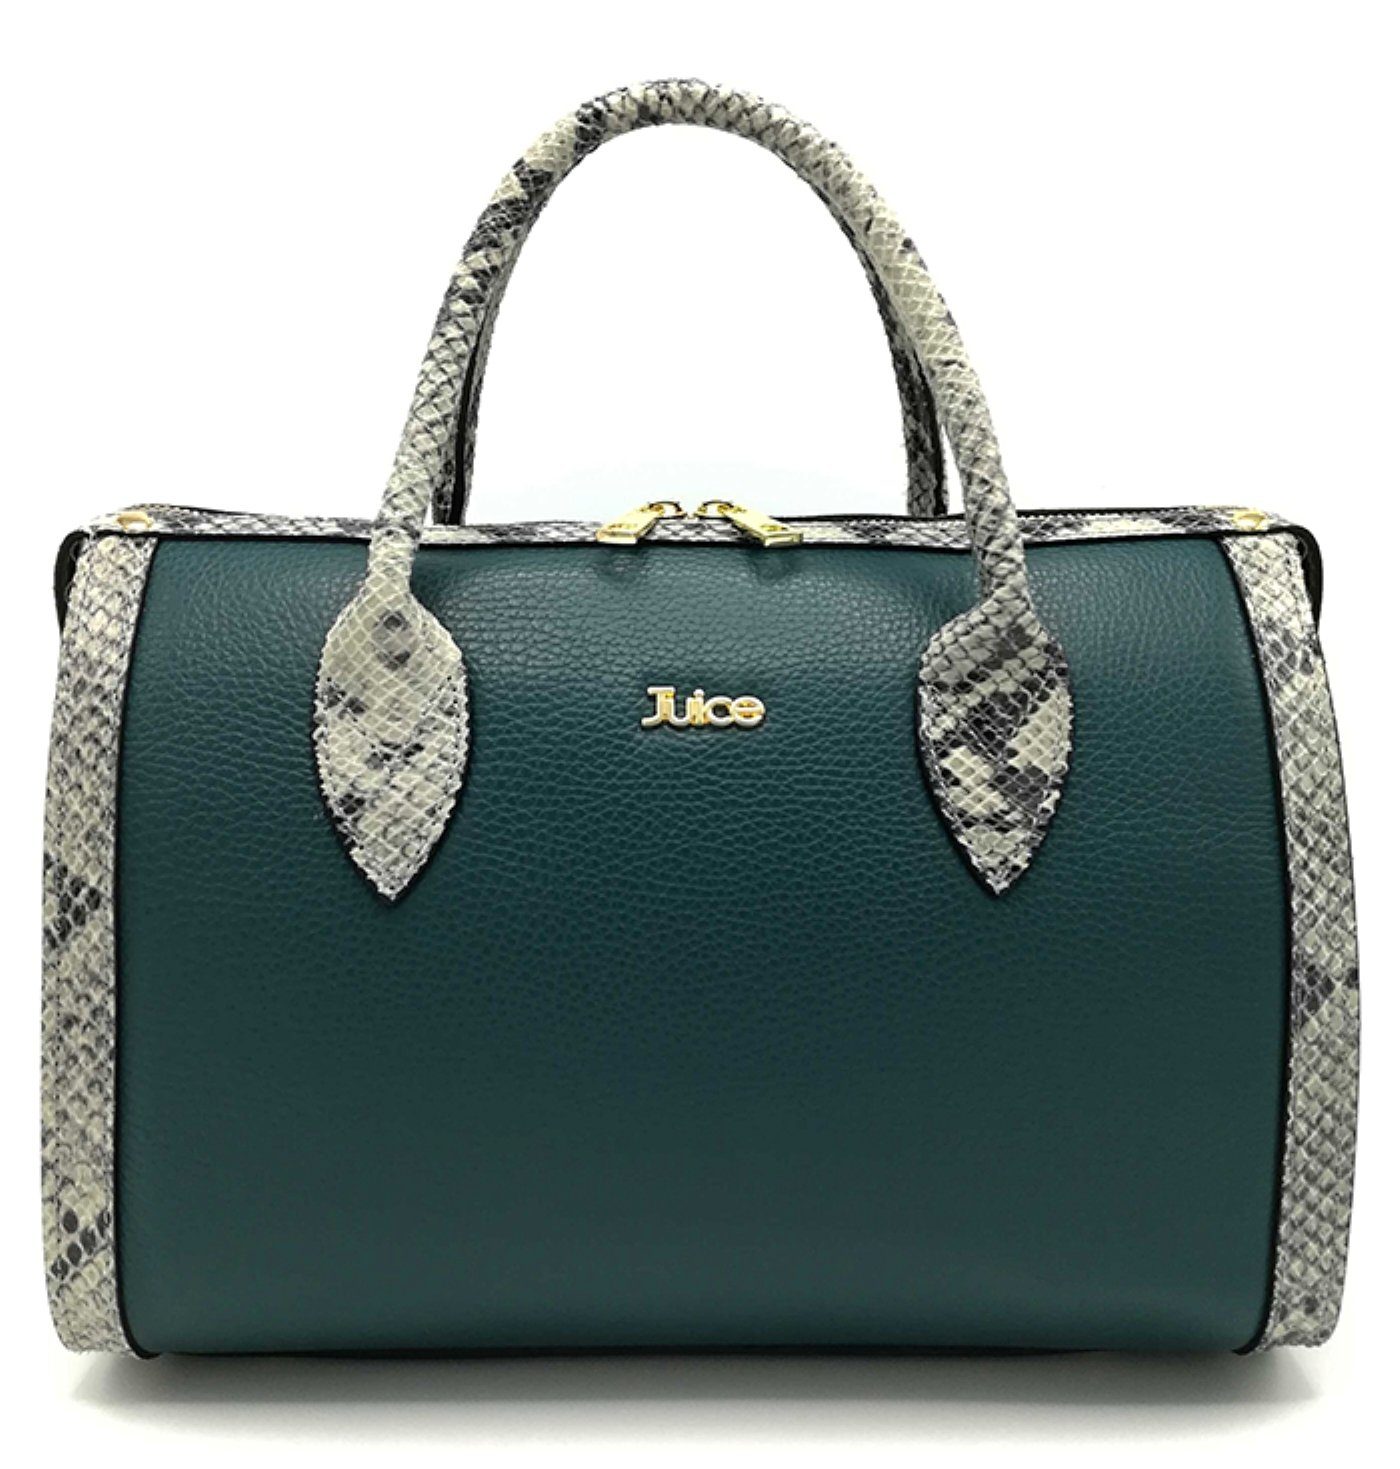 Ava & Jackson Company Handtasche echtes VIVIANA, made grün-beige Italy in Leder